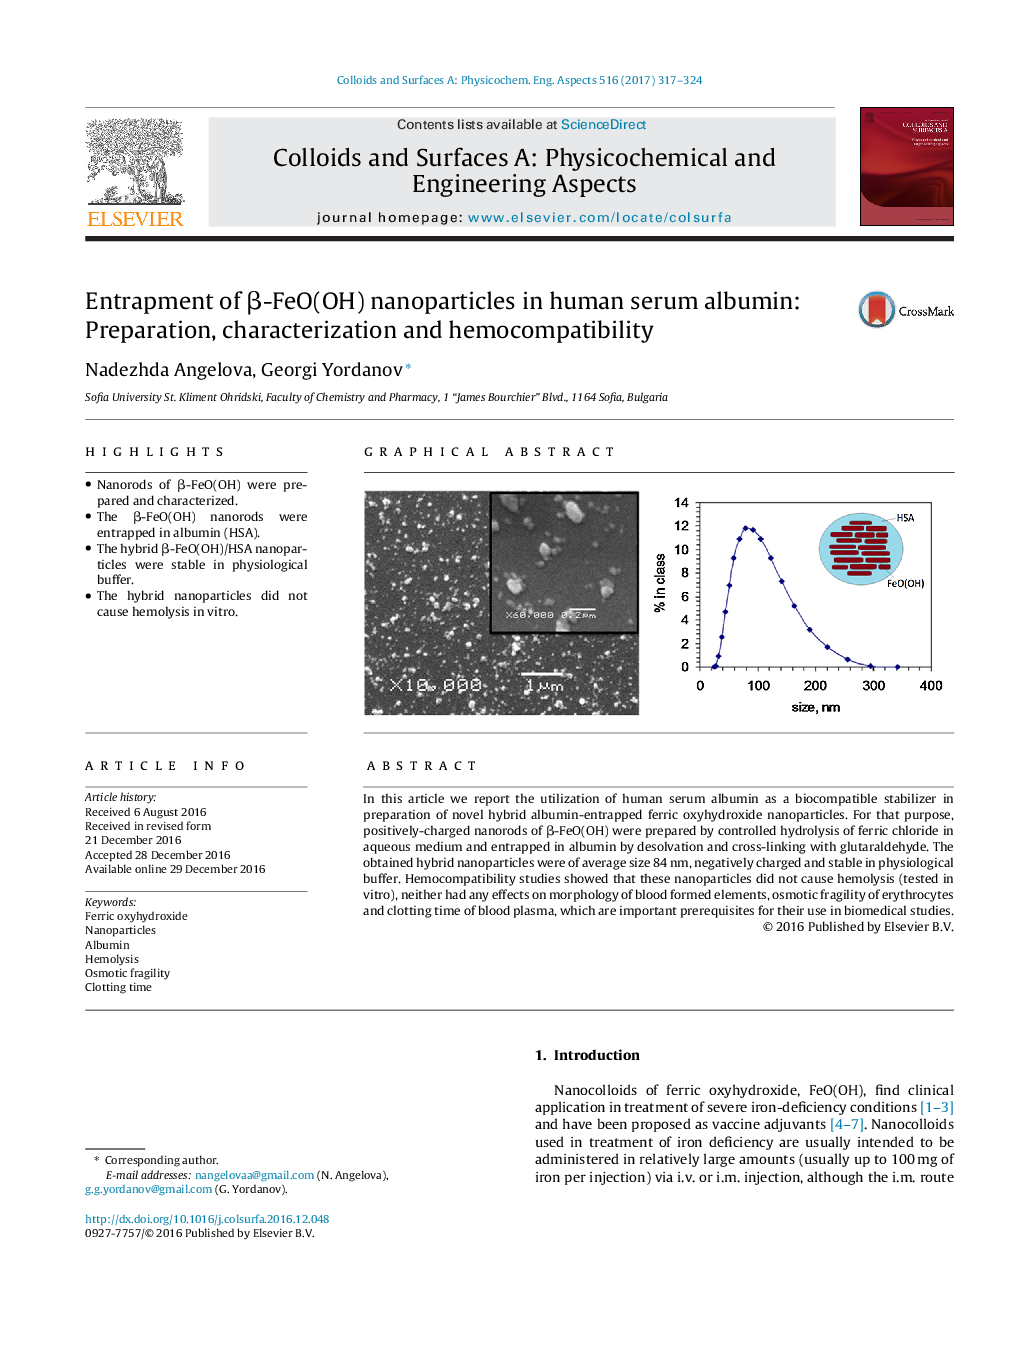 Entrapment of Î²-FeO(OH) nanoparticles in human serum albumin: Preparation, characterization and hemocompatibility